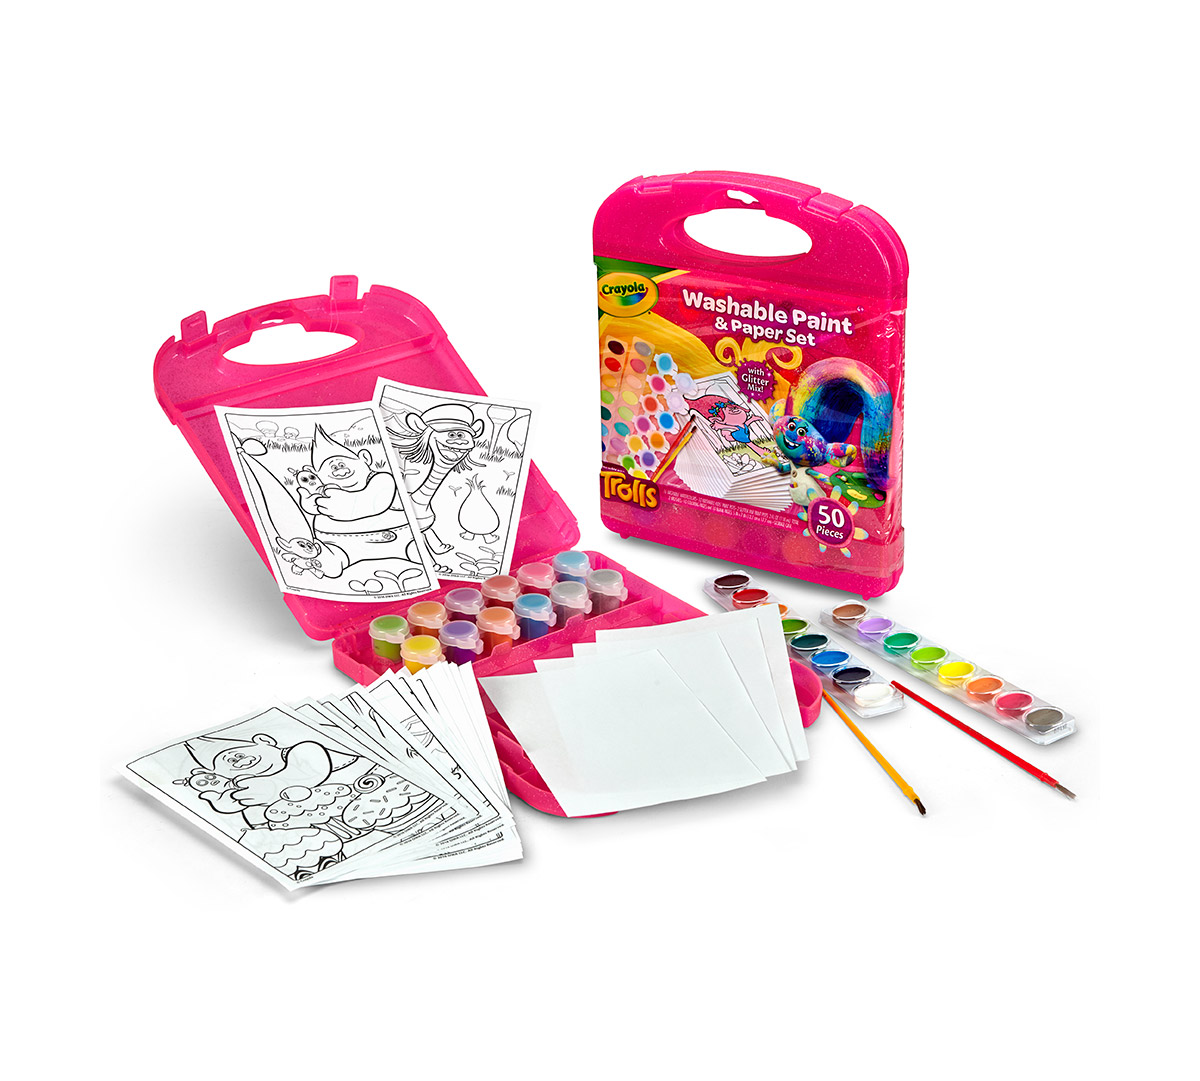 Download Trolls Washable Paint & Paper Set | Crayola